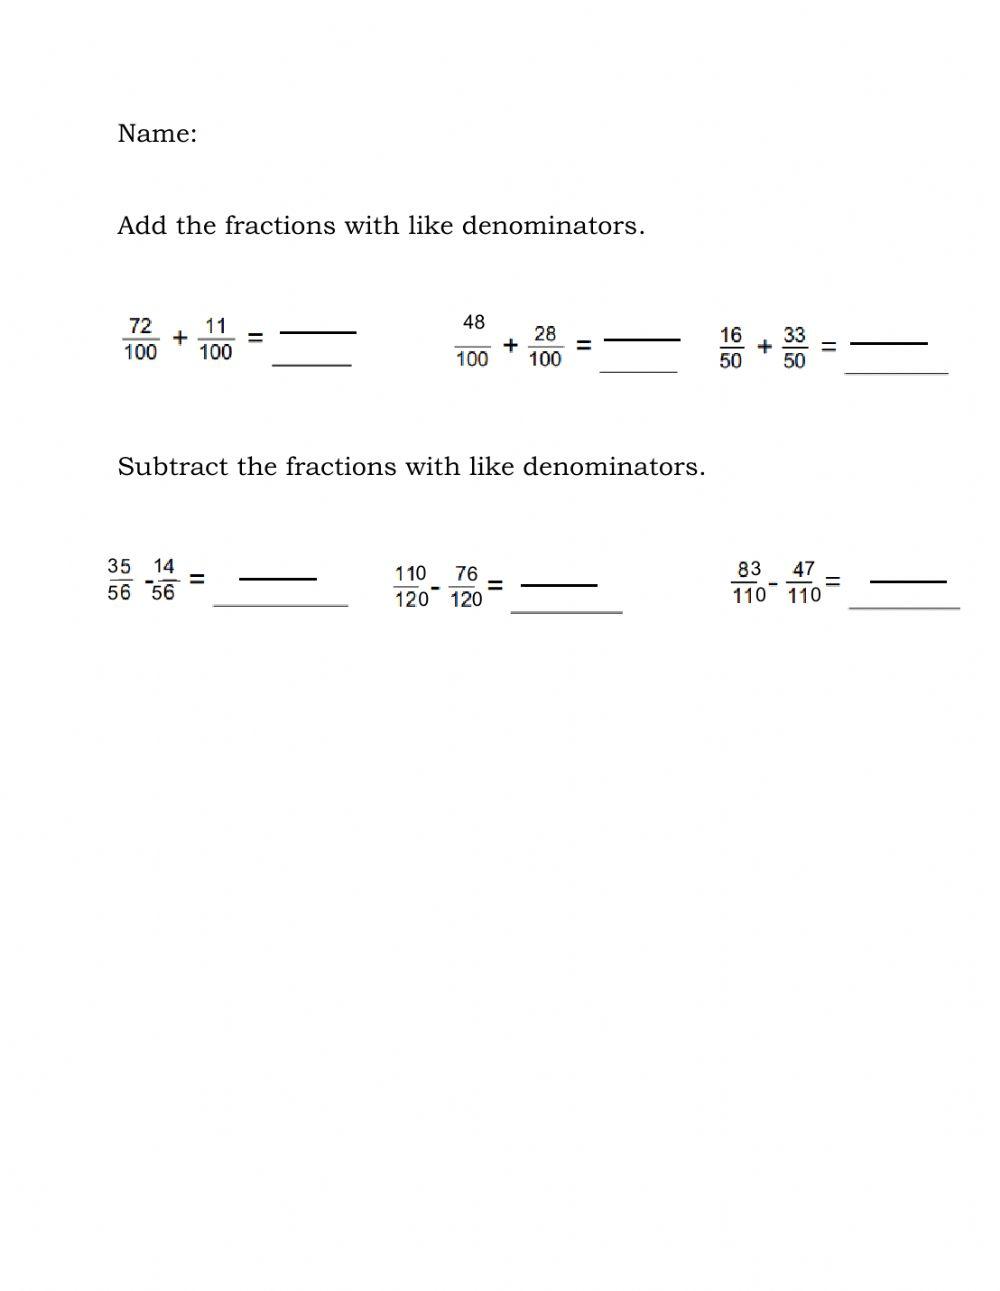 Add and subtract like denominators